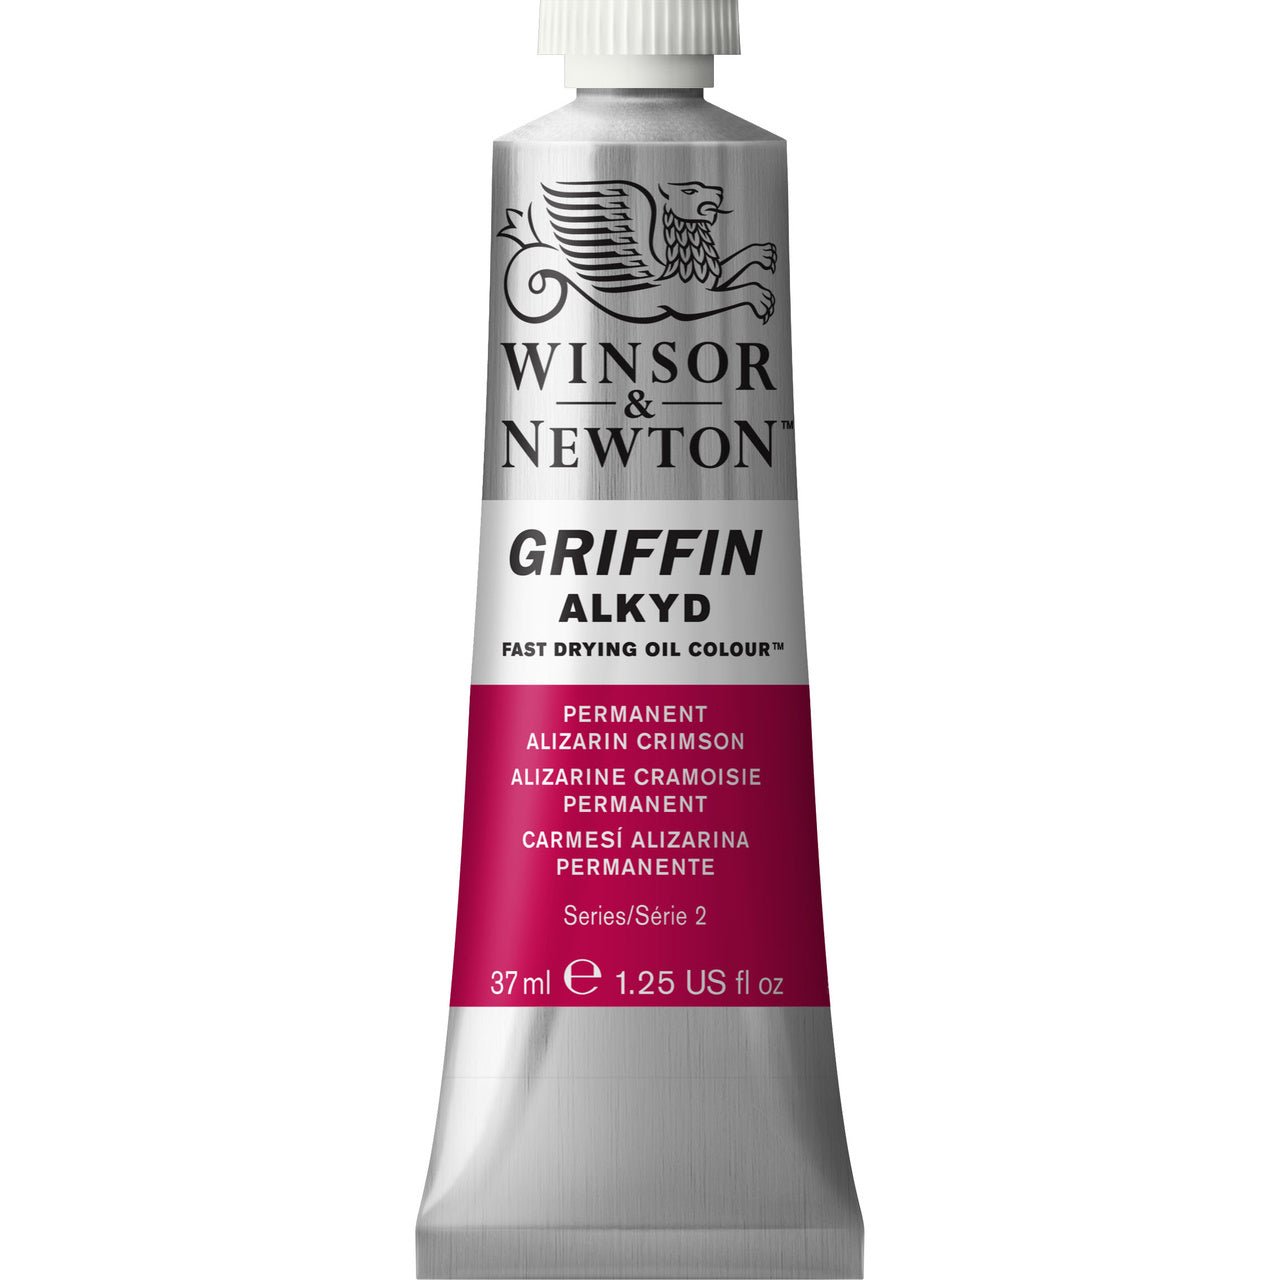 Winsor & Newton Griffin Alkyd - Permanent Alizarin Crimson 37 ml